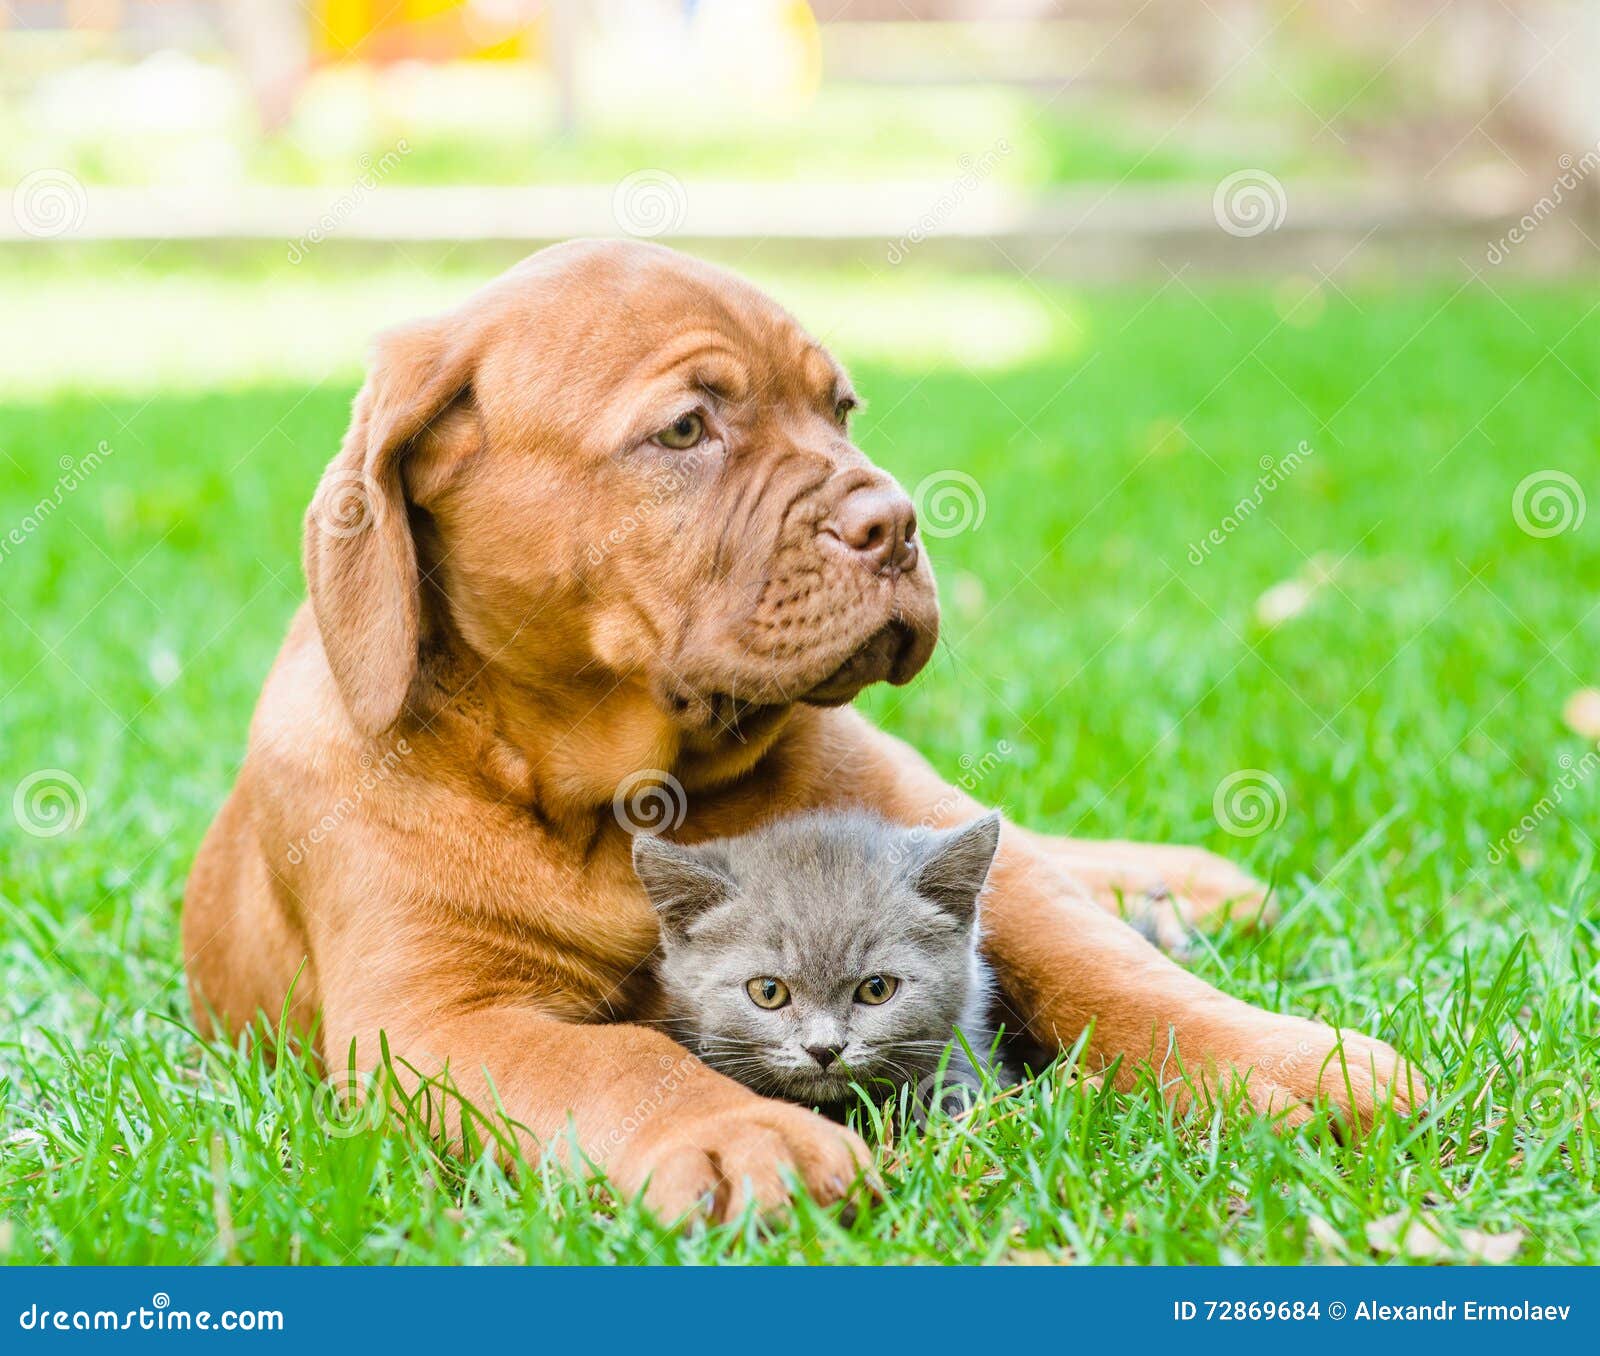 bordeaux puppy hugging a kitten on the green grass. focus on cat